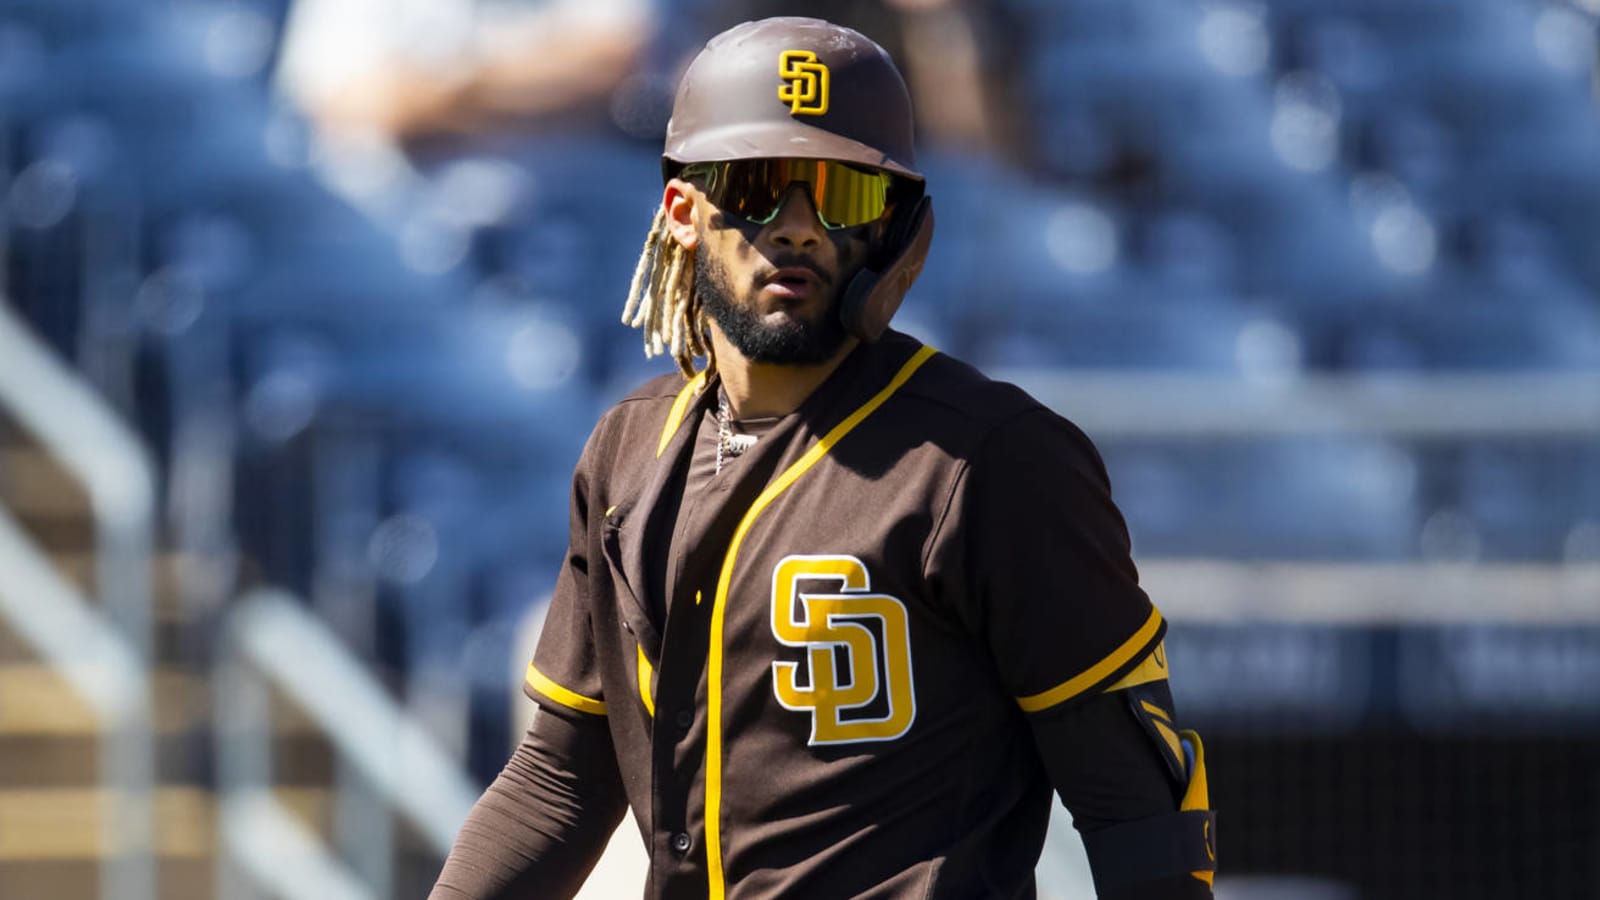 Padres SS Tatis Jr. leaves game with shoulder discomfort